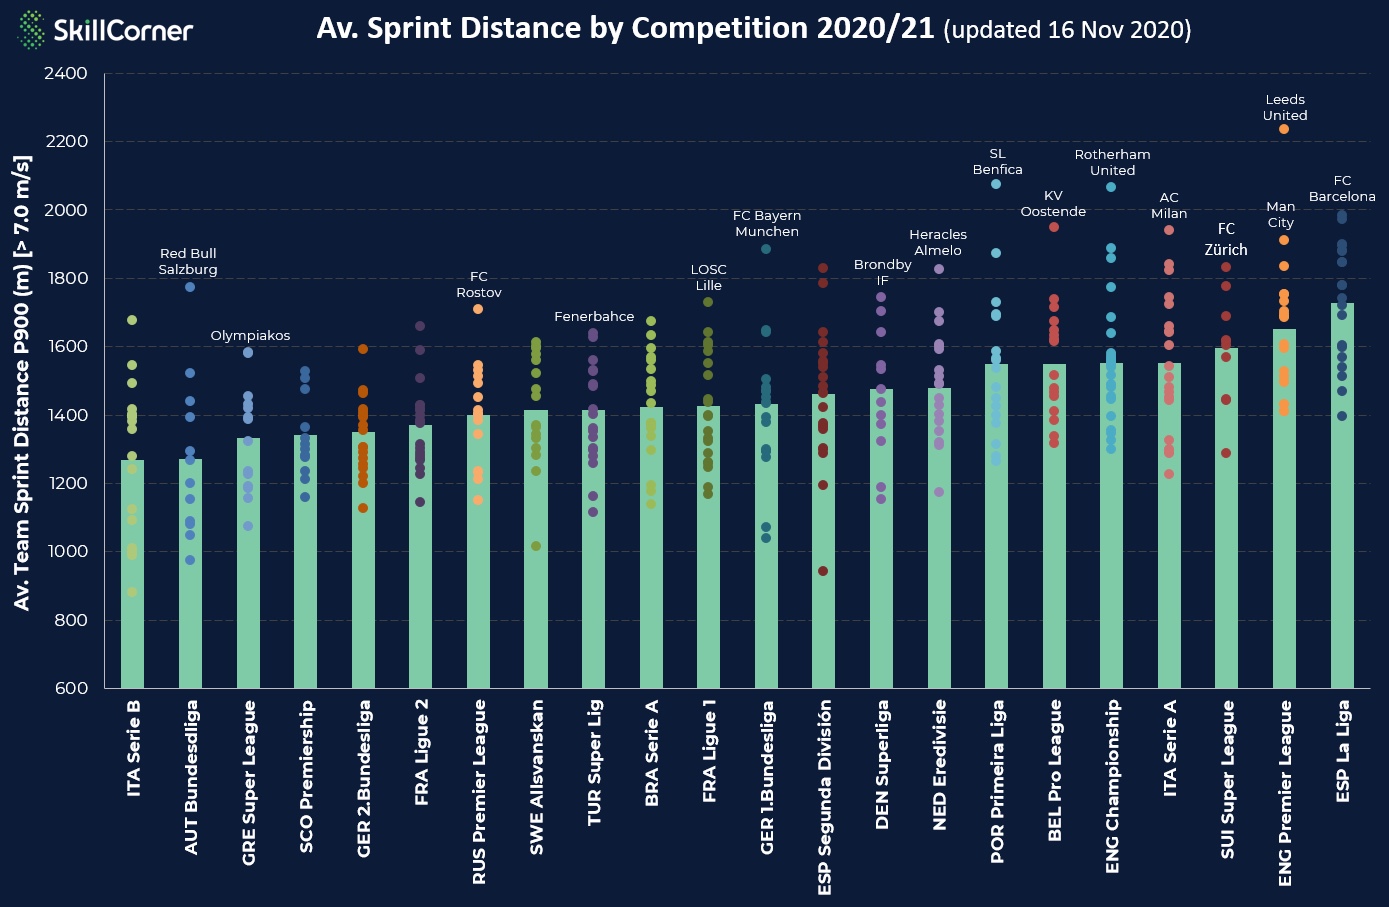 Average sprint distance to November 16th 2020 for 2020/21 season